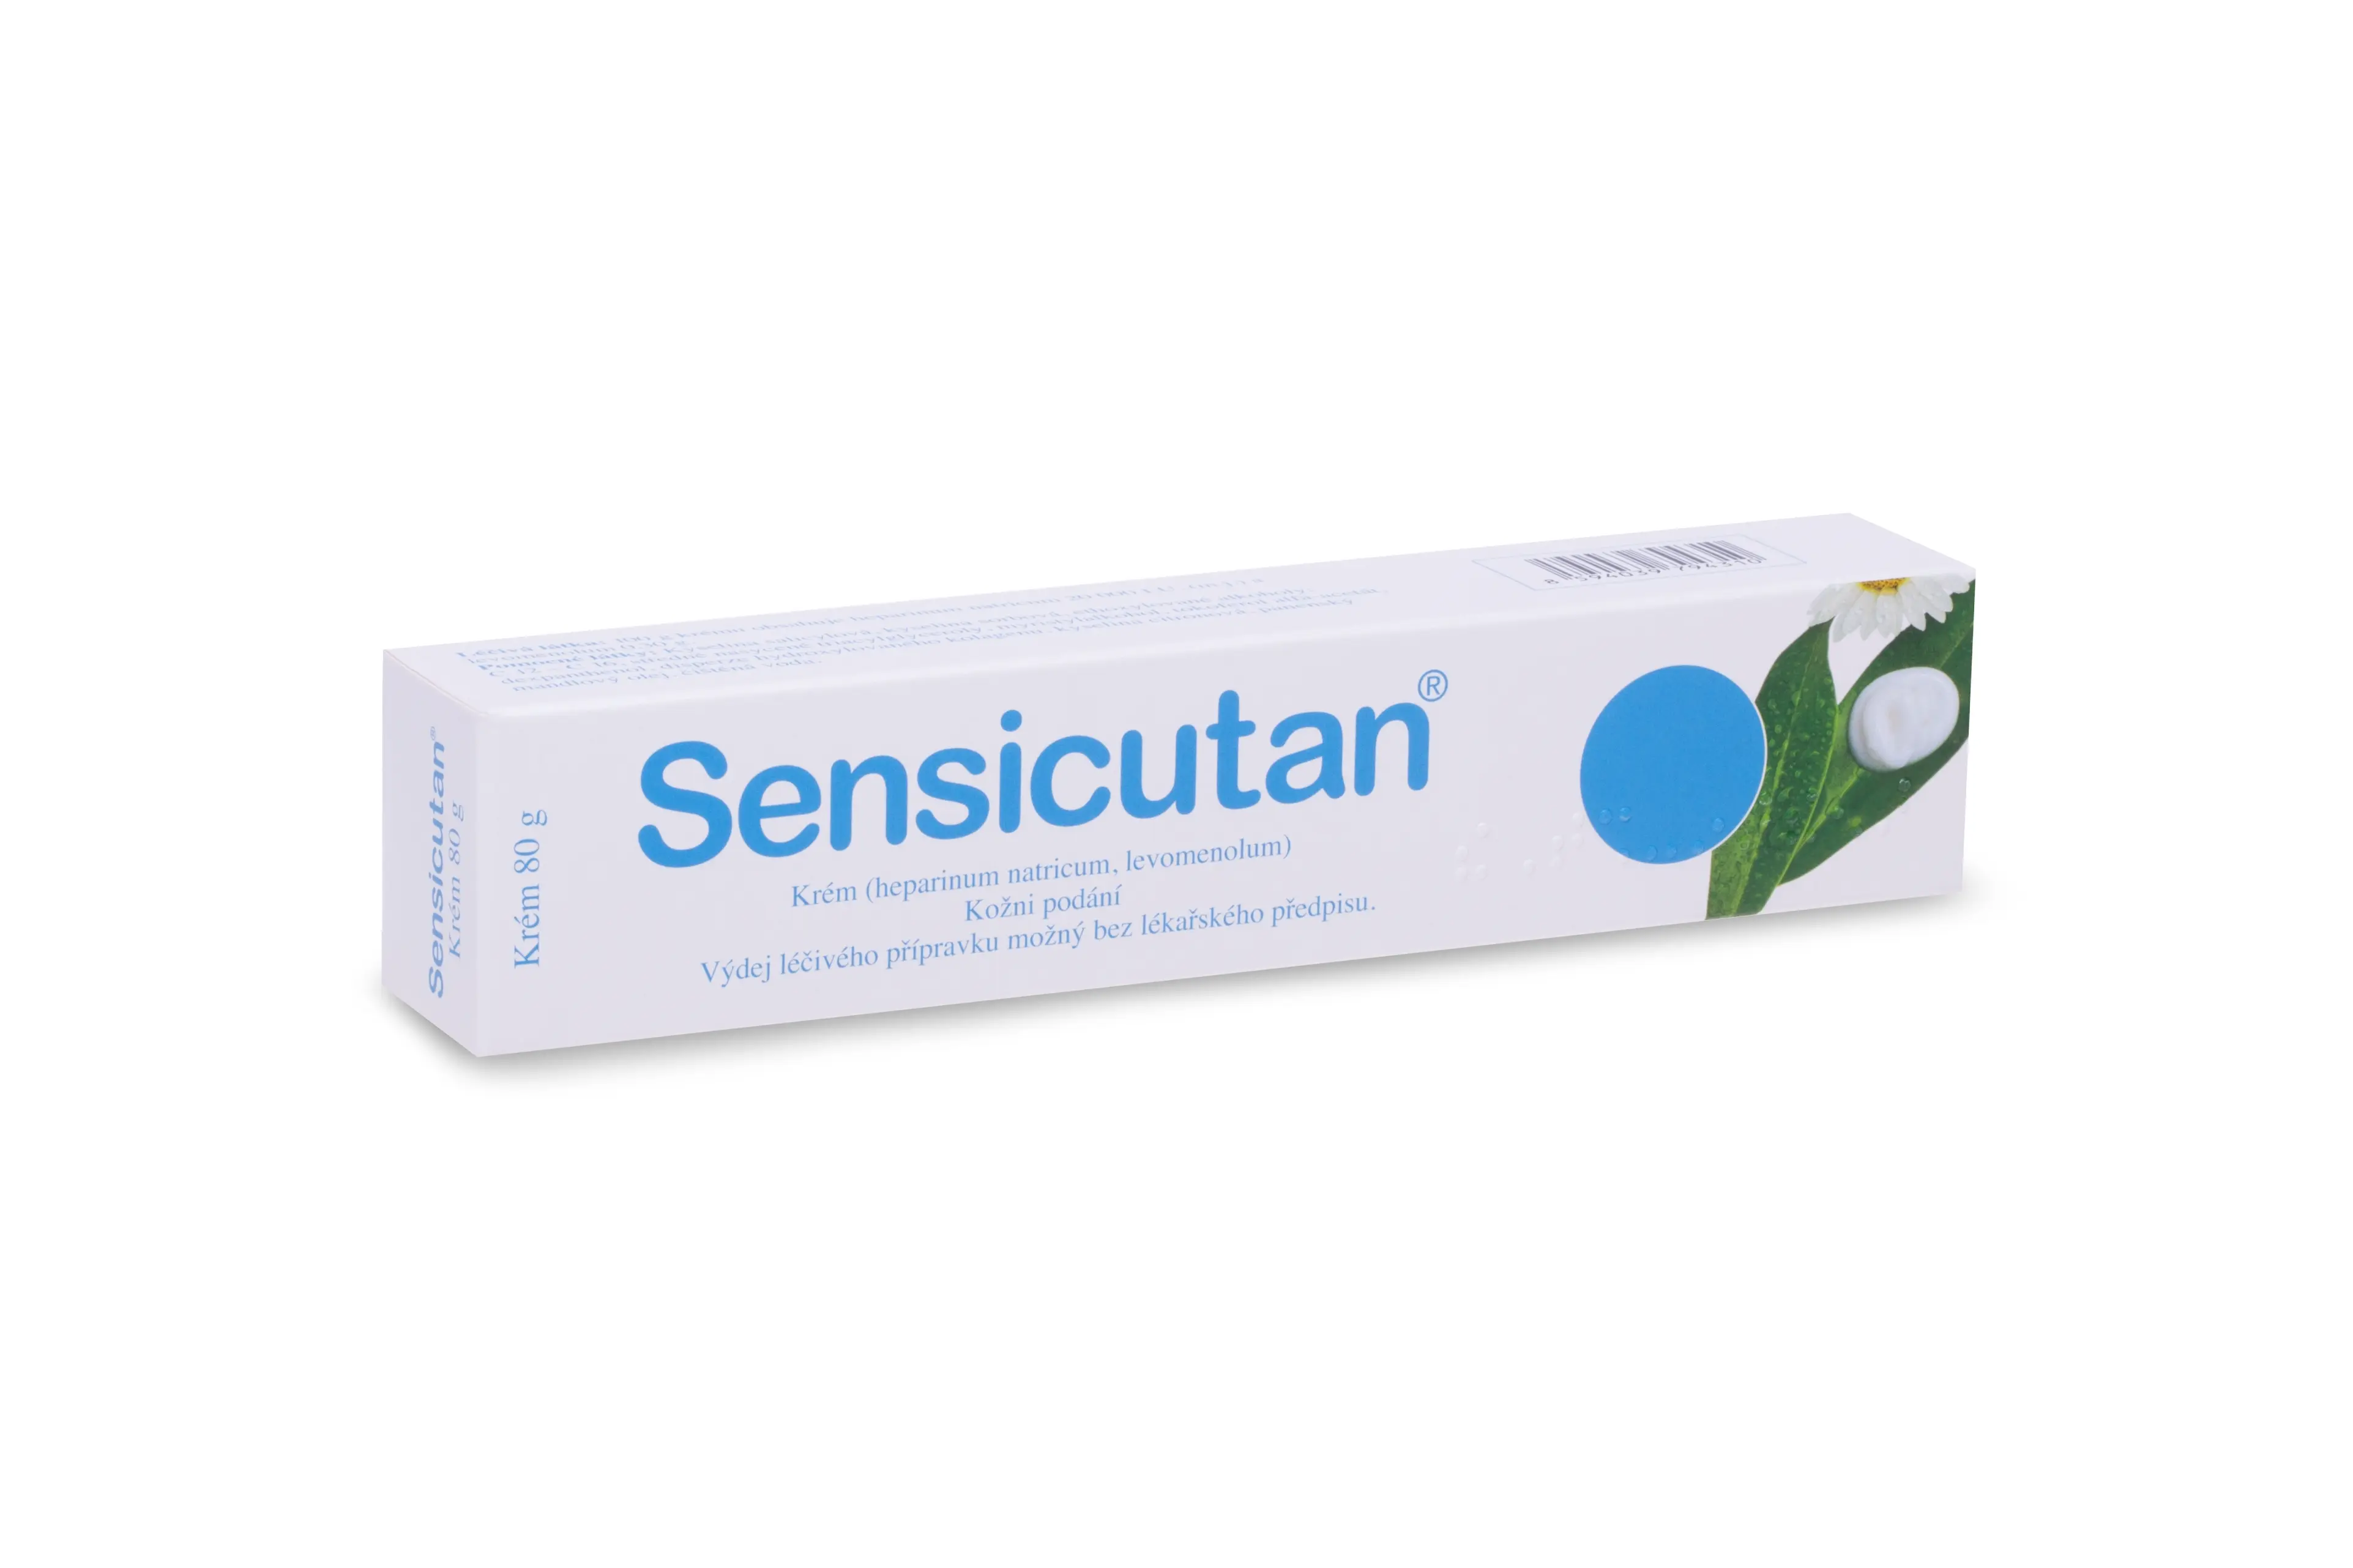 Sensicutan 200IU/g+3 mg/g.crm.80 g